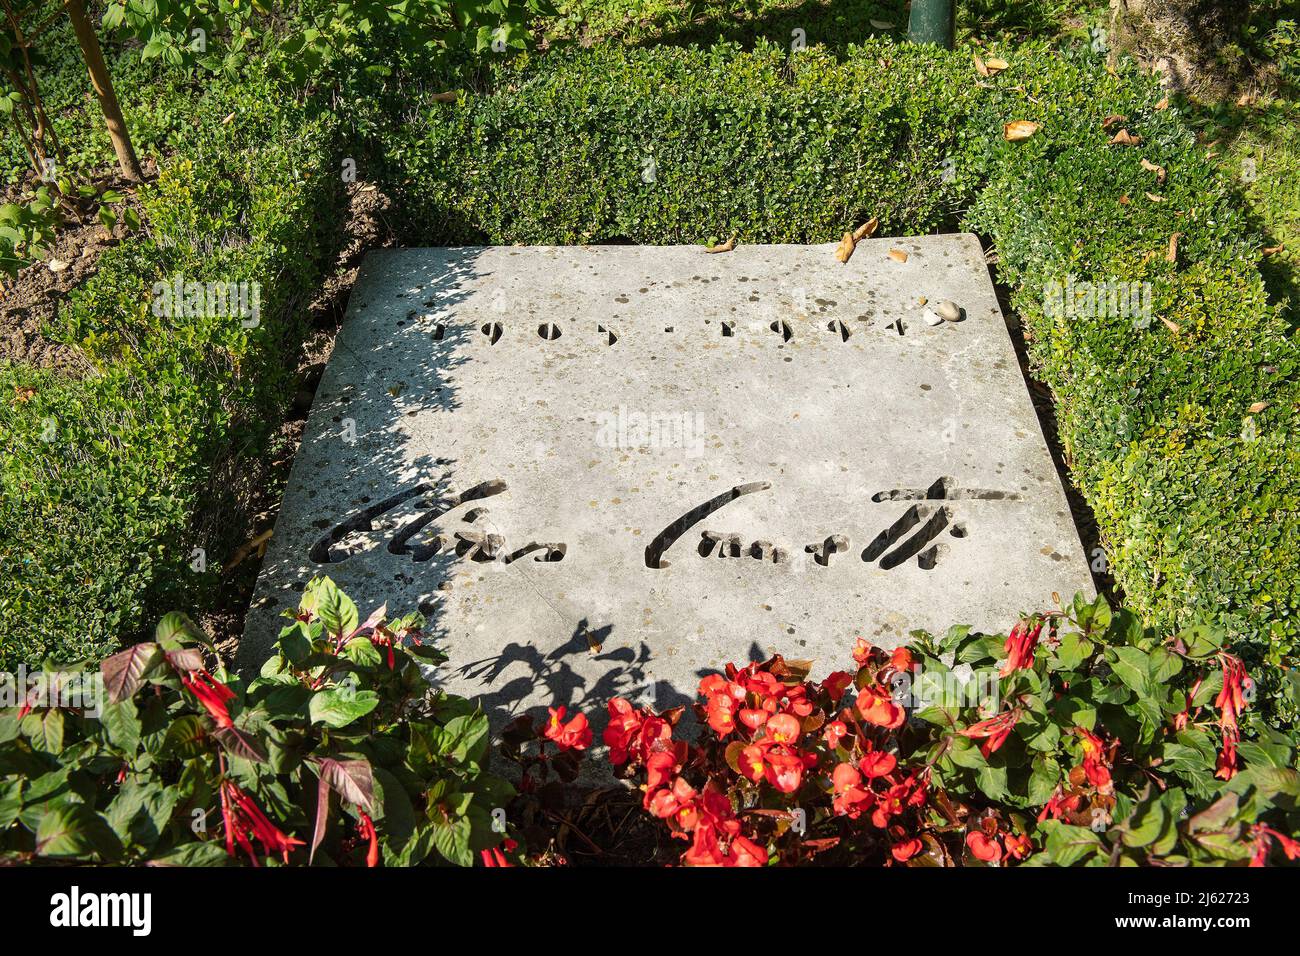 Grave of Elias Canette in the cemetry of Fluntern, Zurich, Switzerland Stock Photo